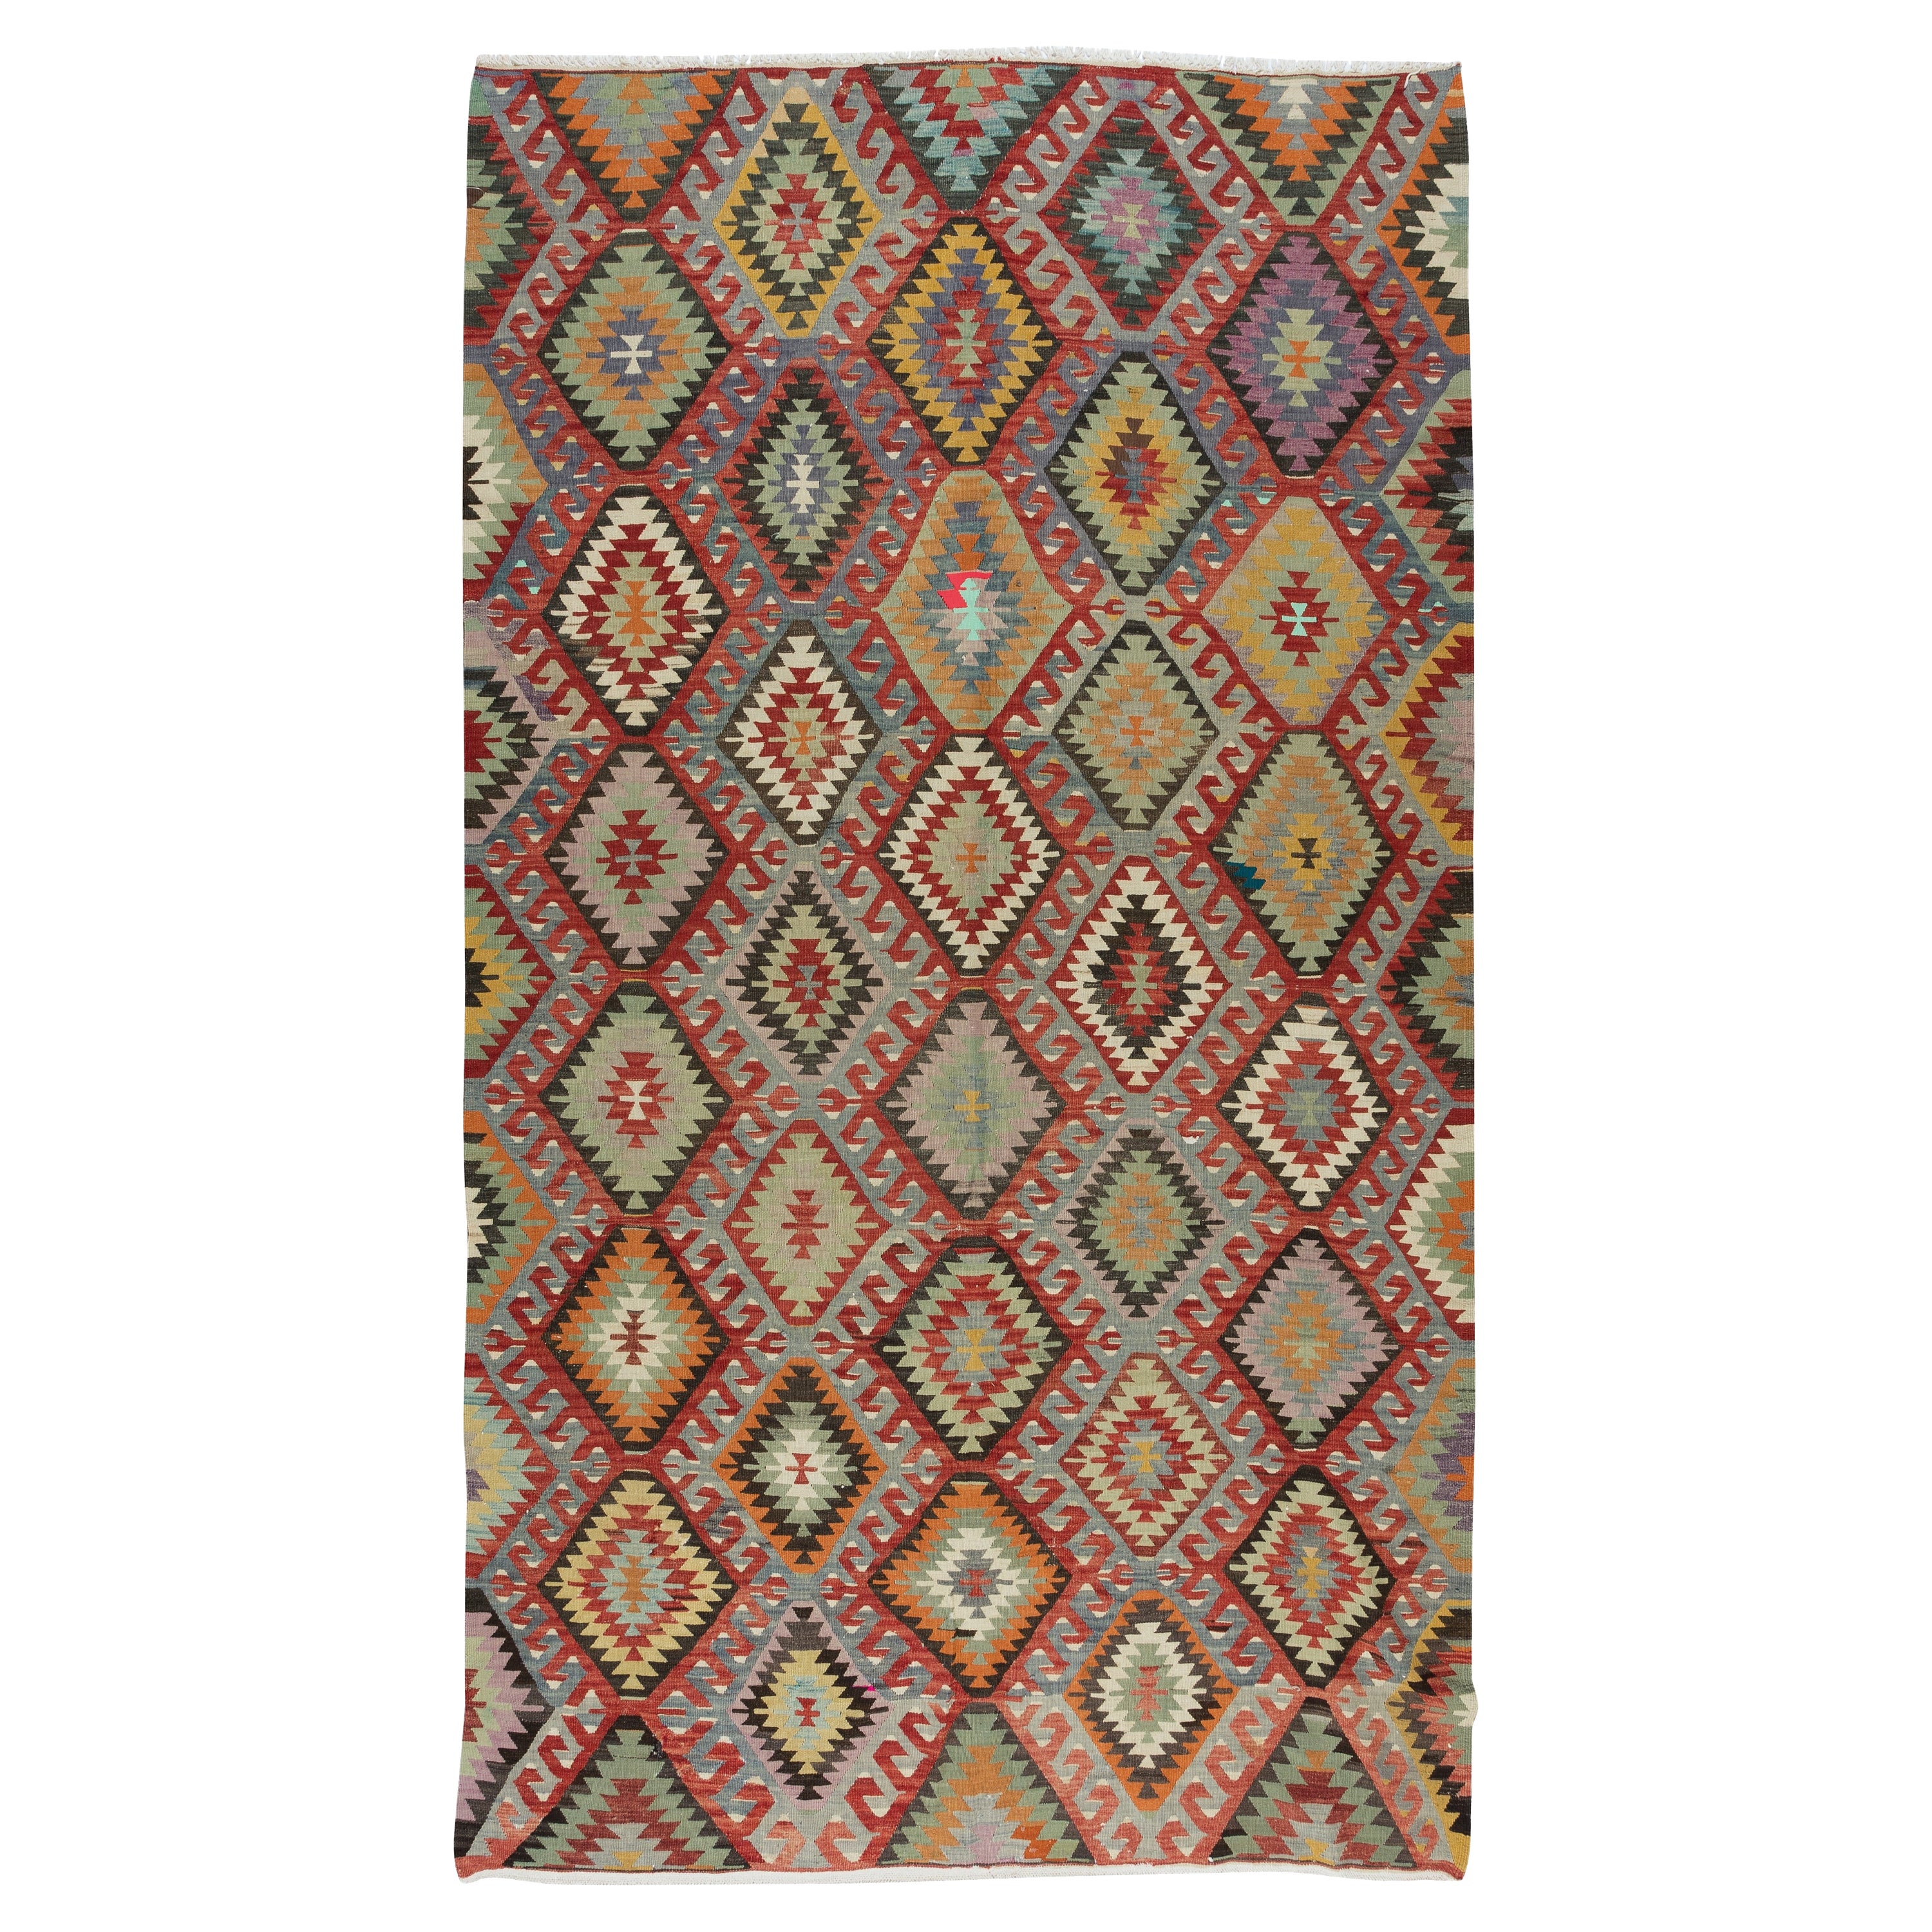 5.8x10 Ft One of a Kind Handmade Turkish Wool Kilim, Multicolored Flat-Weave Rug